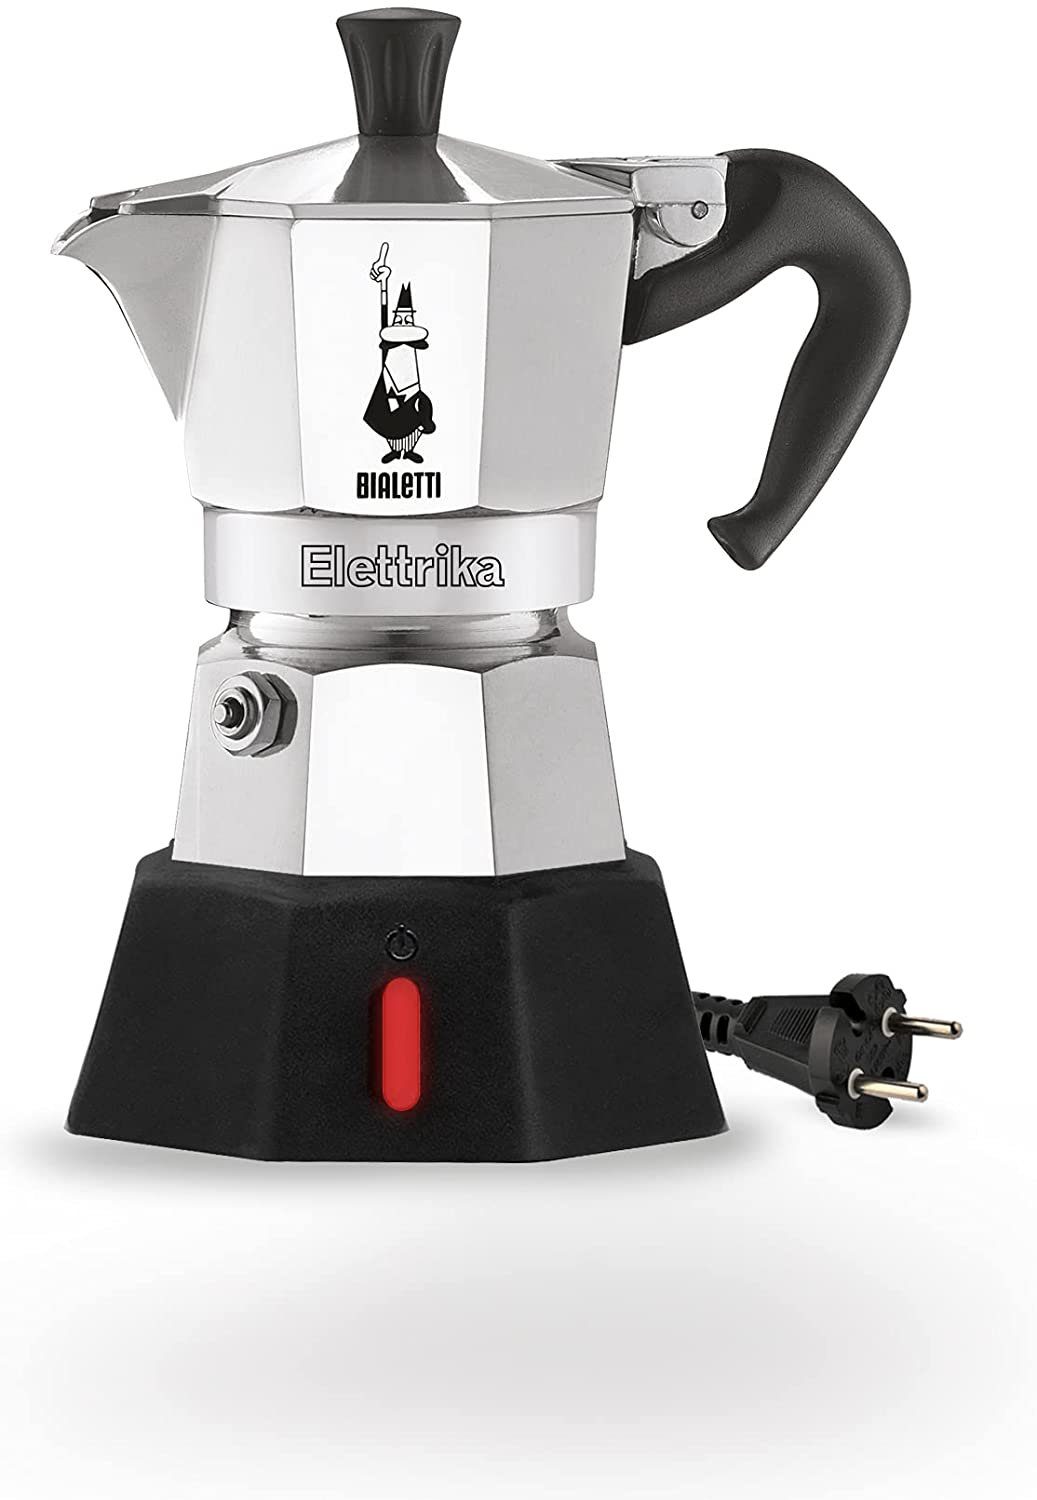 BIALETTI Espressomaschine Bialetti New Moka Elettrika Espressokocher 2  Tassen silber 7290 online kaufen | OTTO